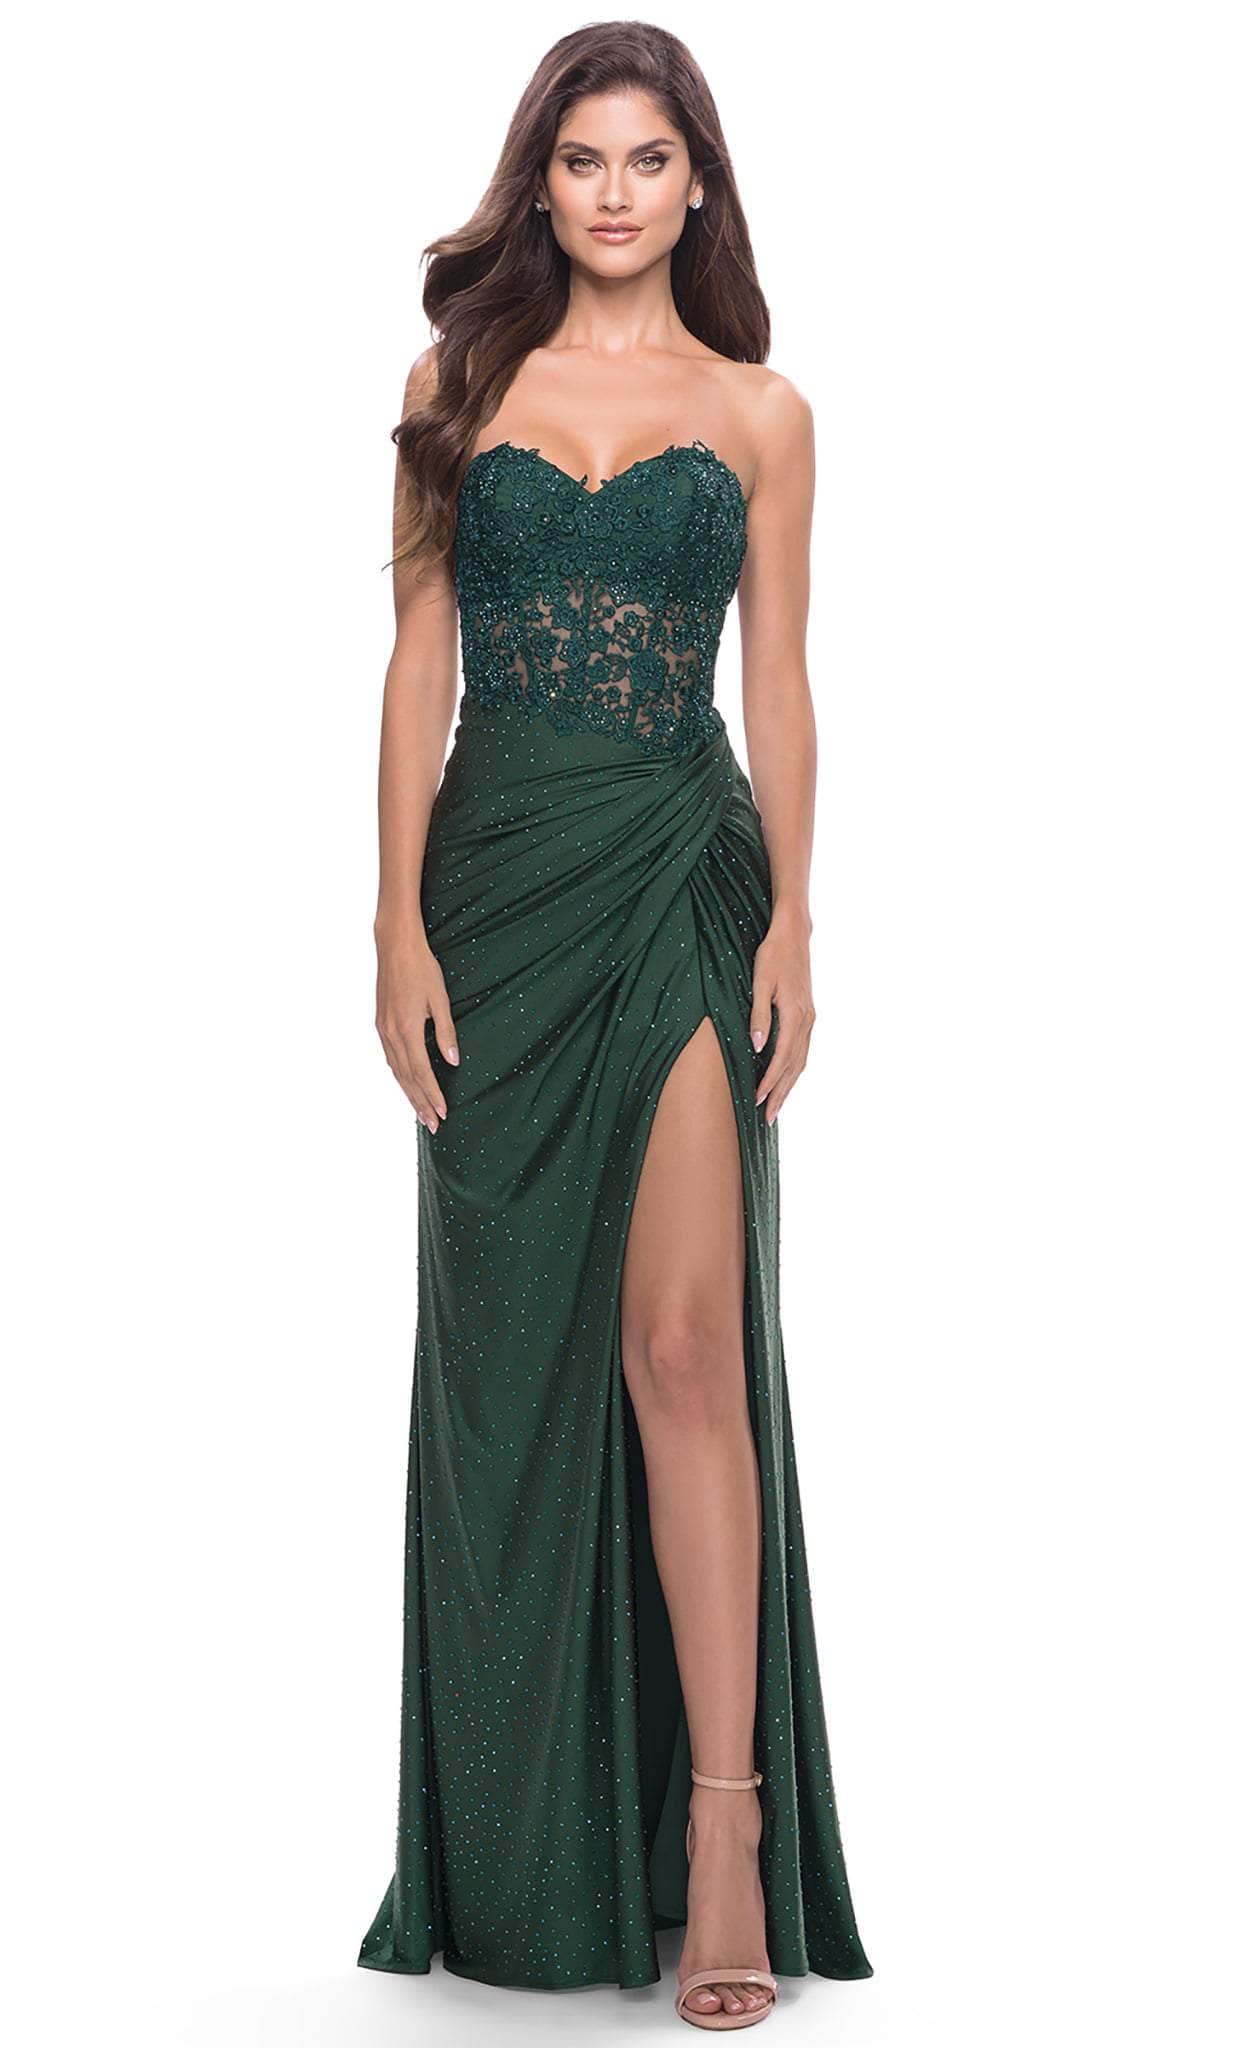 Image of La Femme 31343 - Lace Bodice Prom Dress